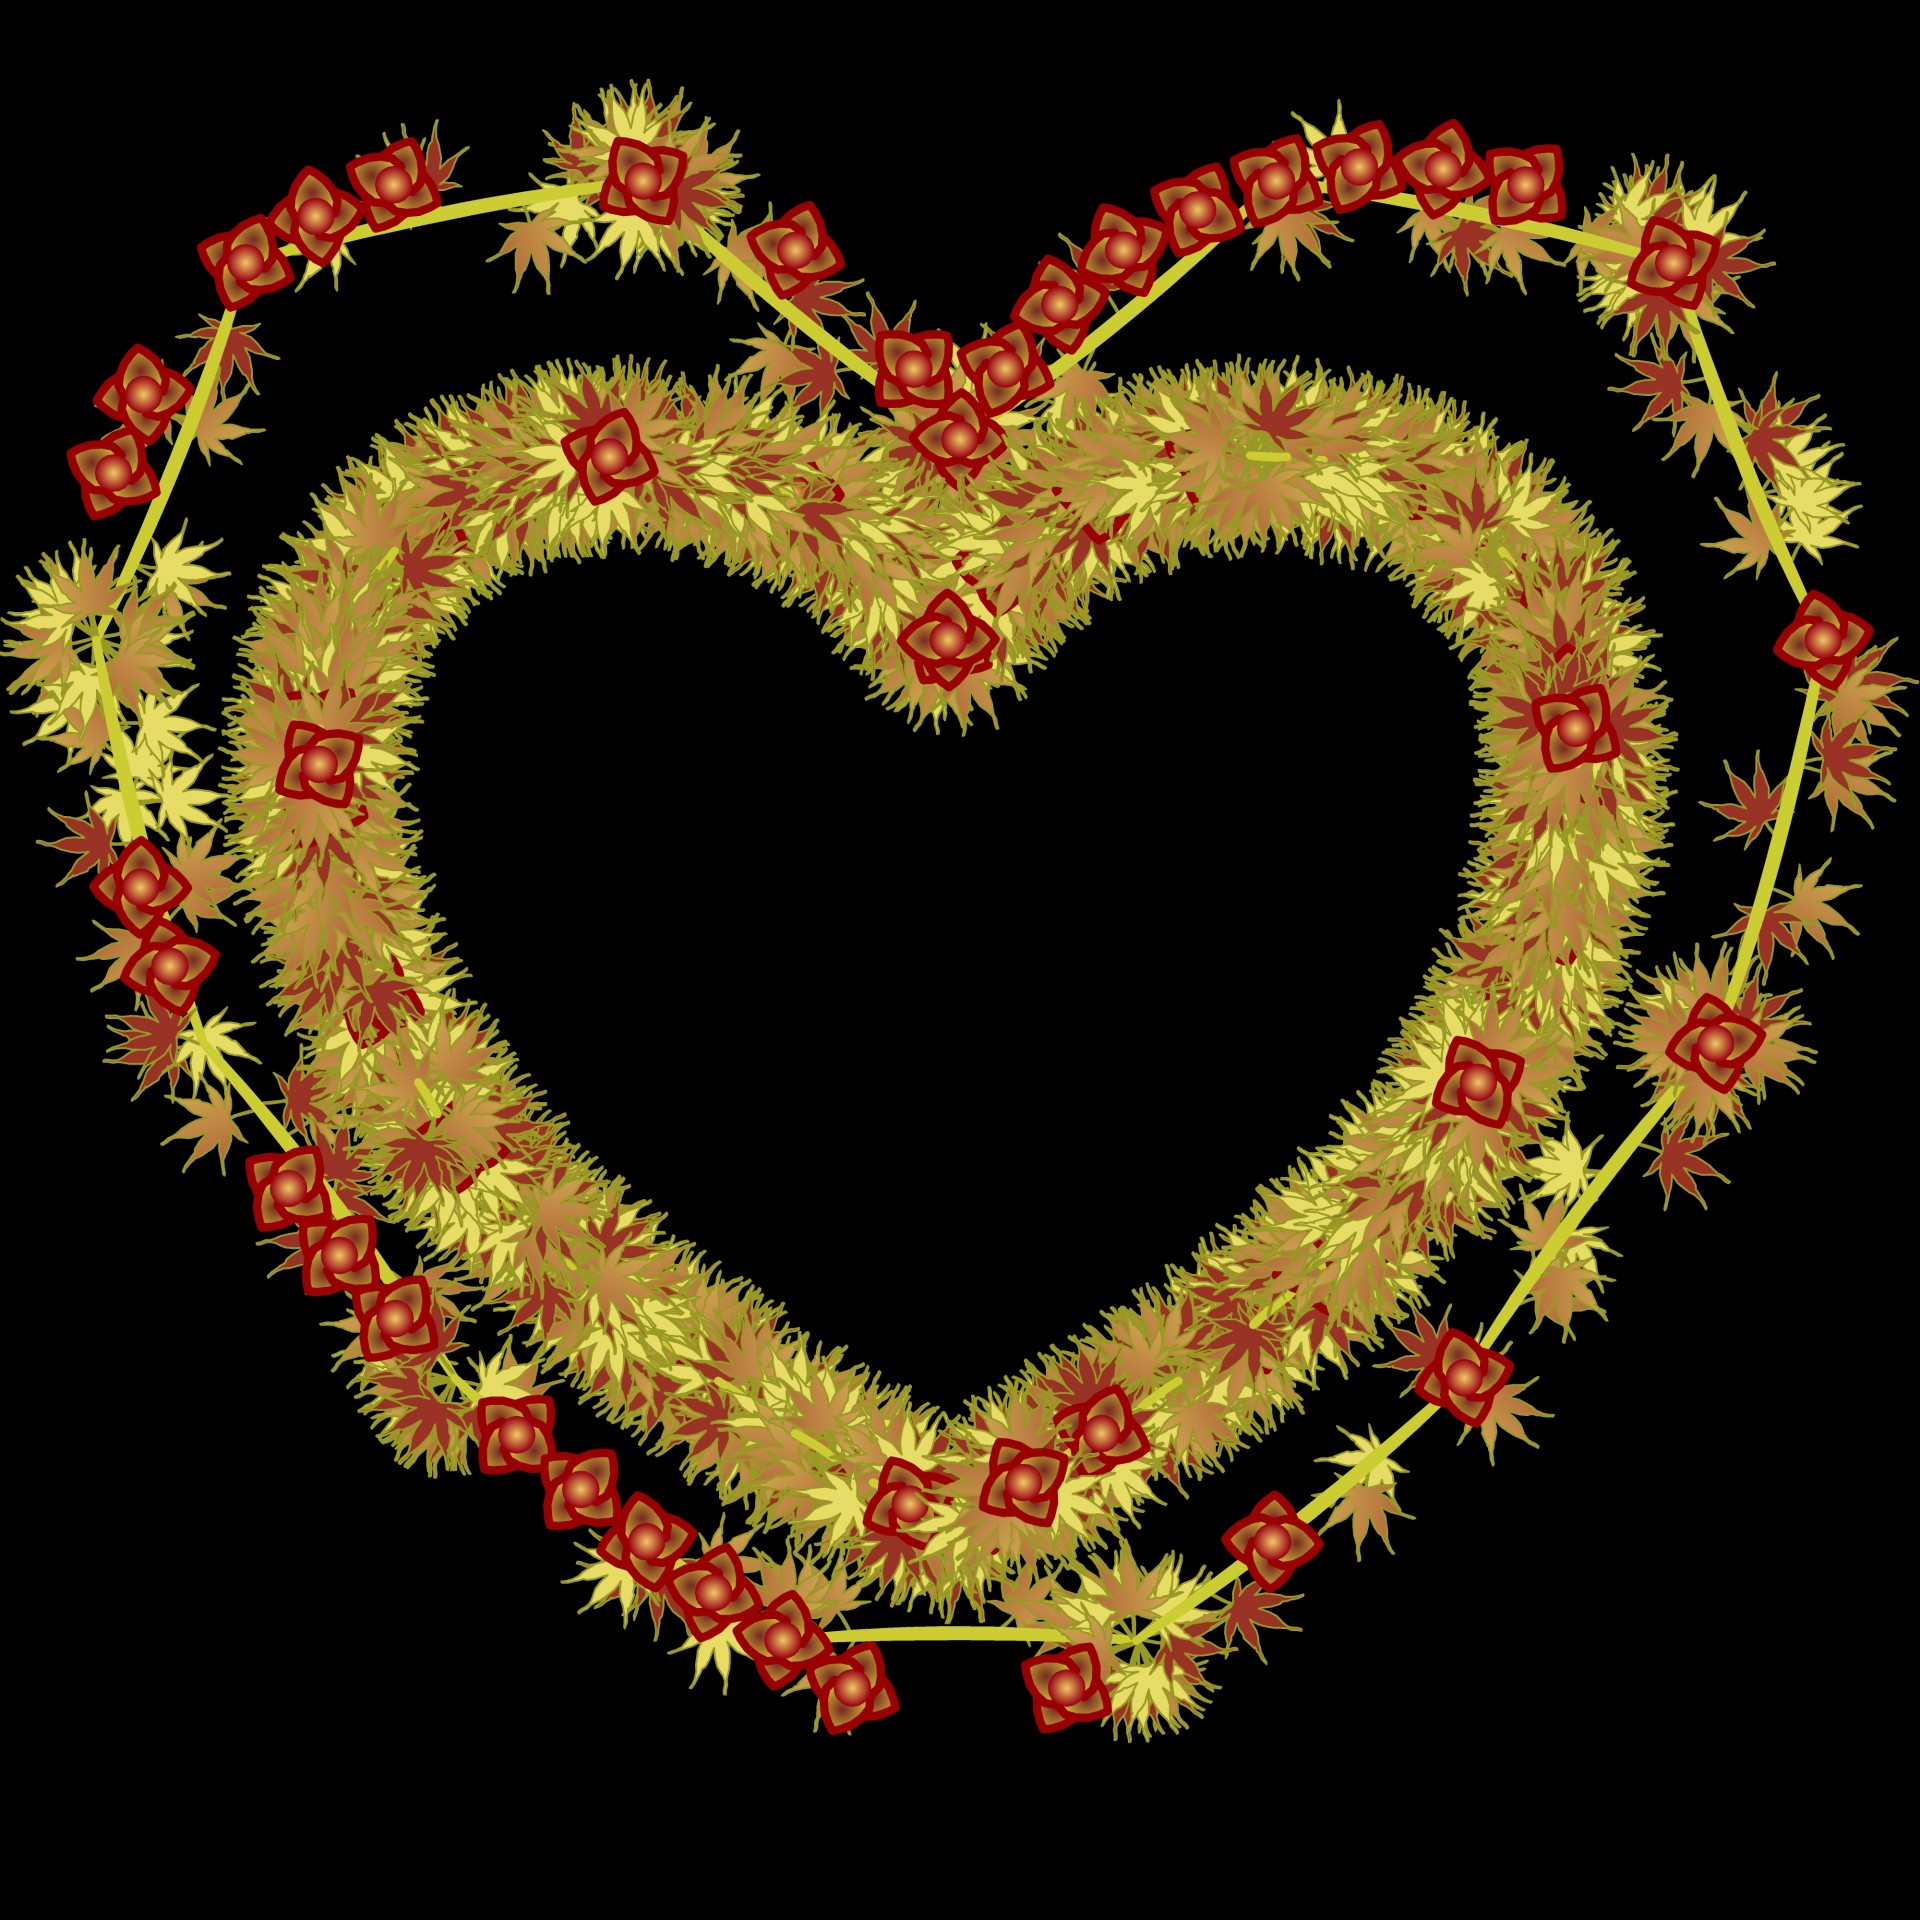 porcupine flower heart free photo